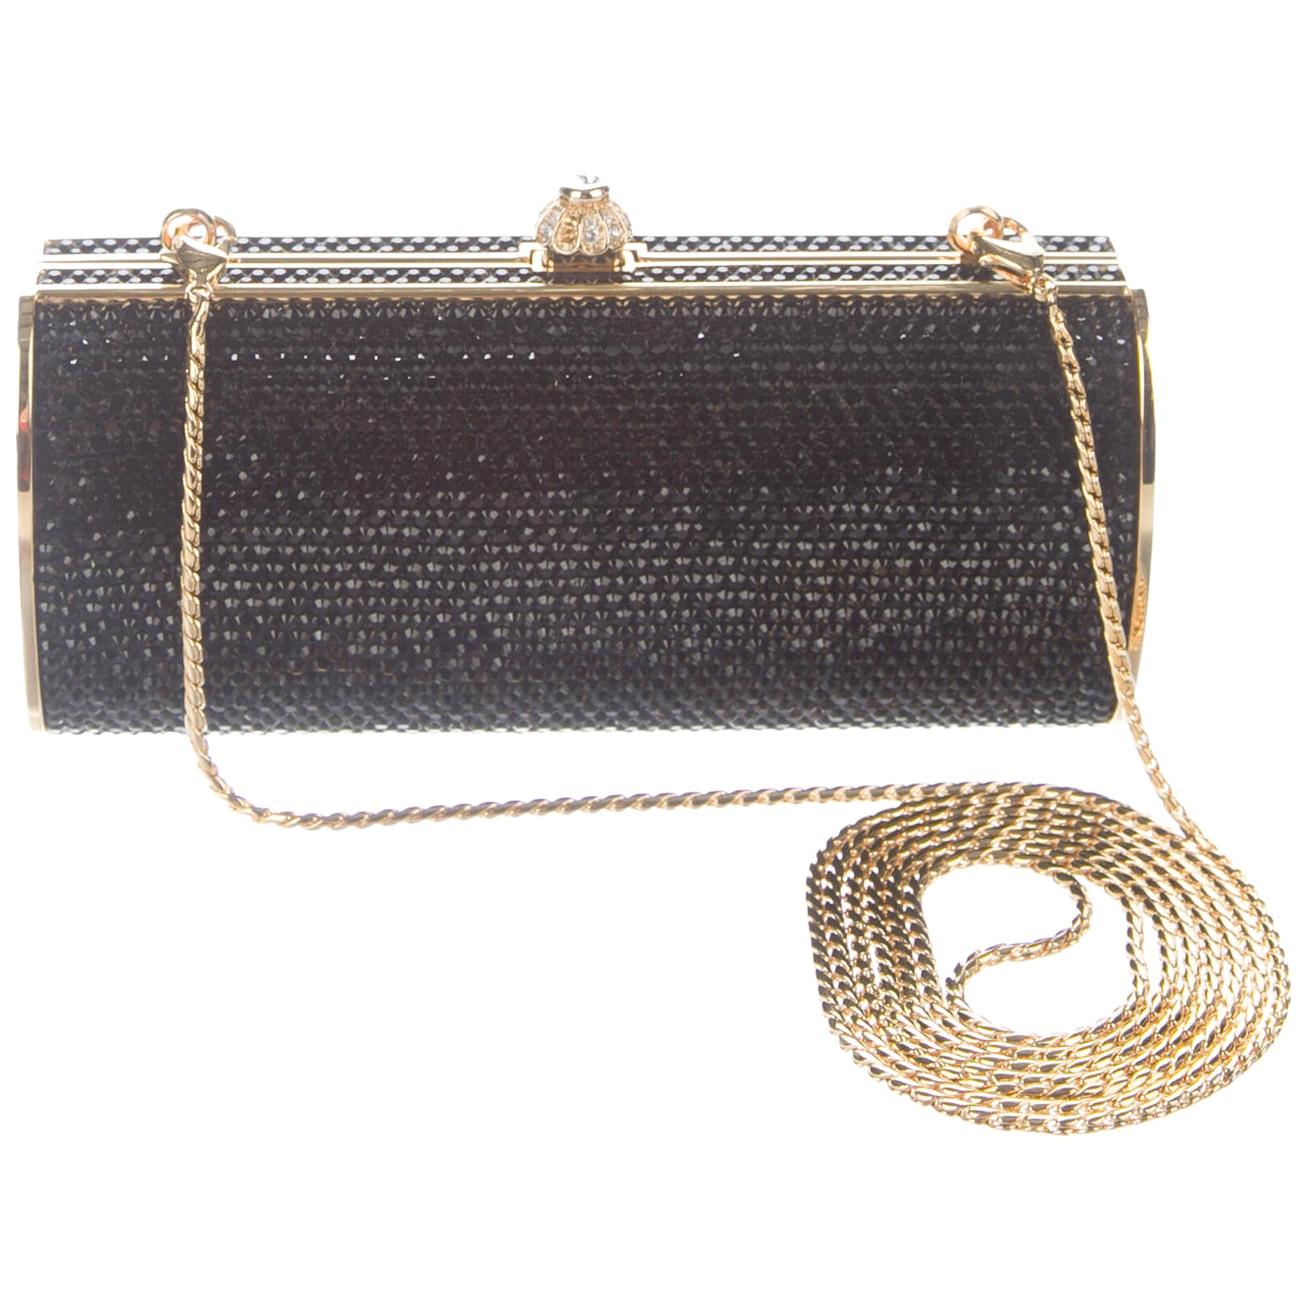 Judith Leiber NEW Black Gold Crystal Evening Box Clutch Shoulder Bag in Box